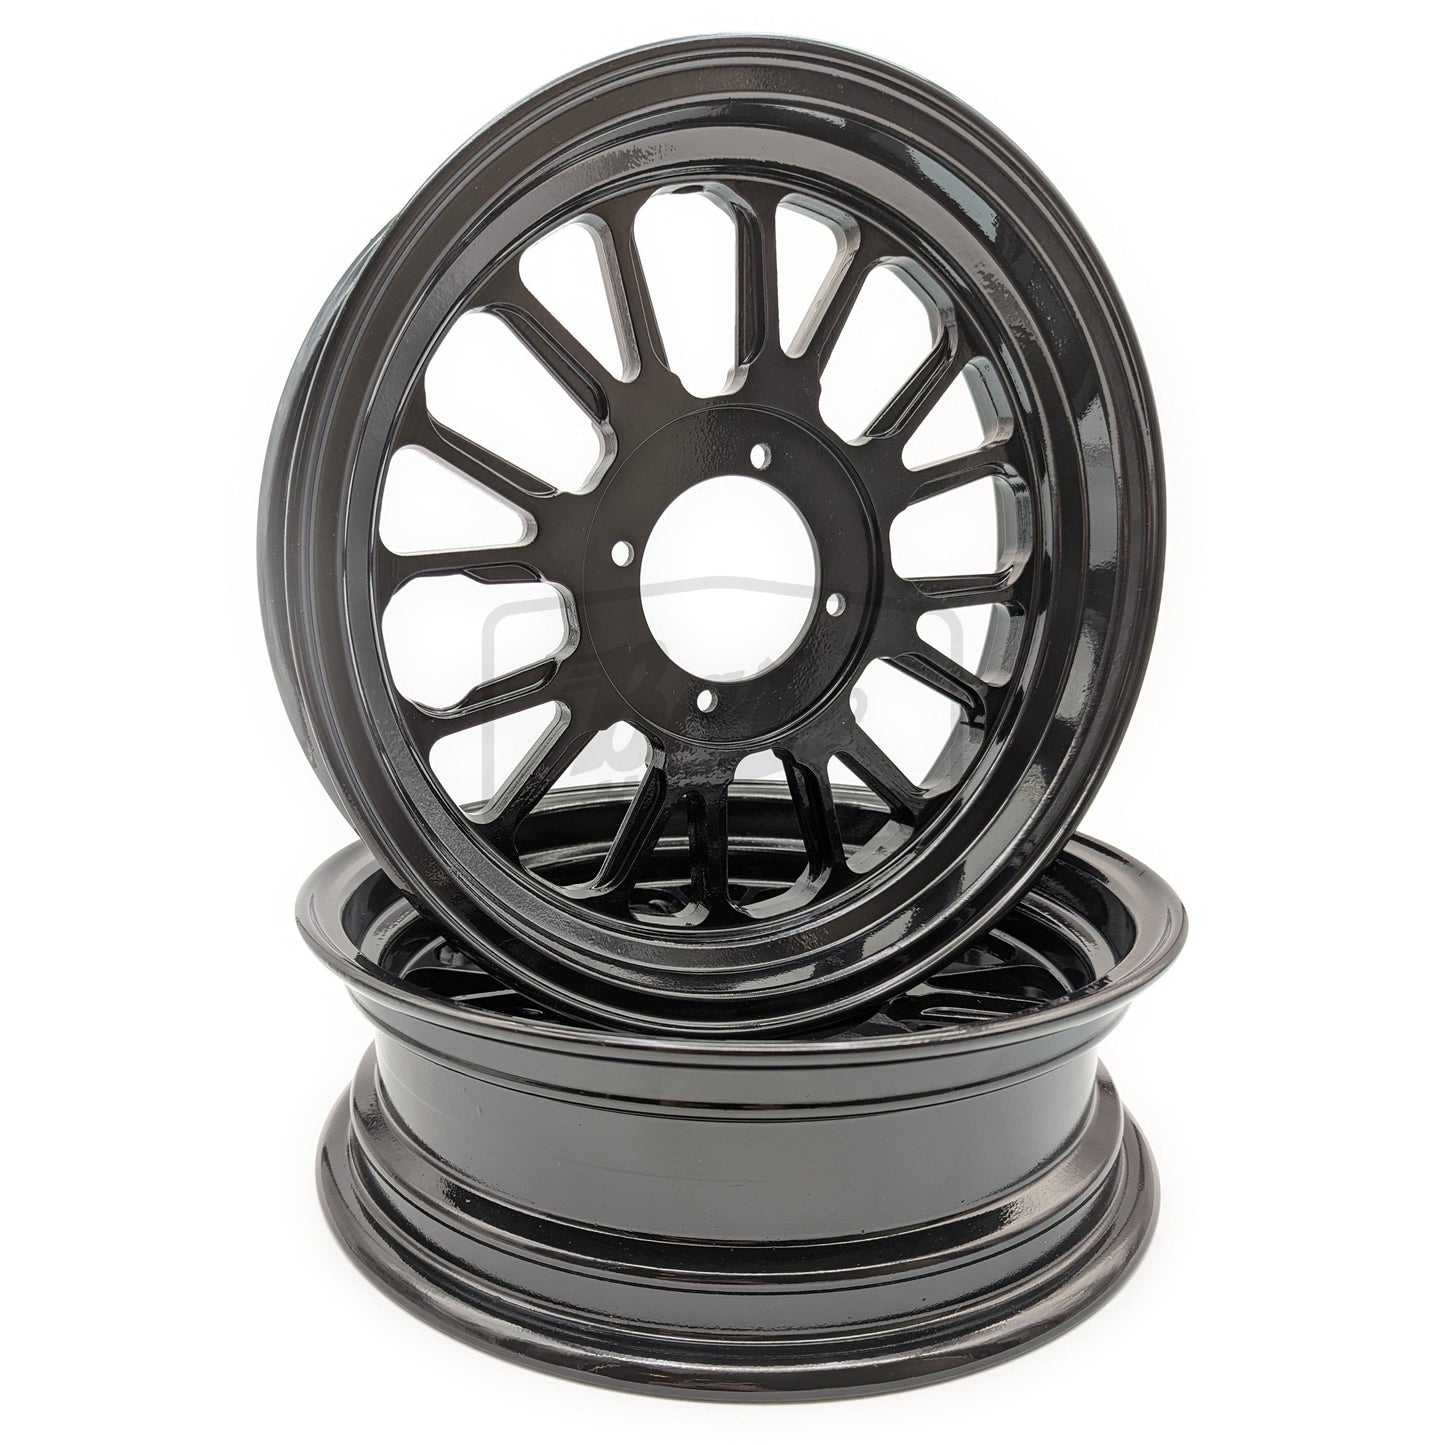 12" X 3.5" / 2.75" Staggered 16 Spoke 1 Piece Rim (2 Wheel Set) (Black)